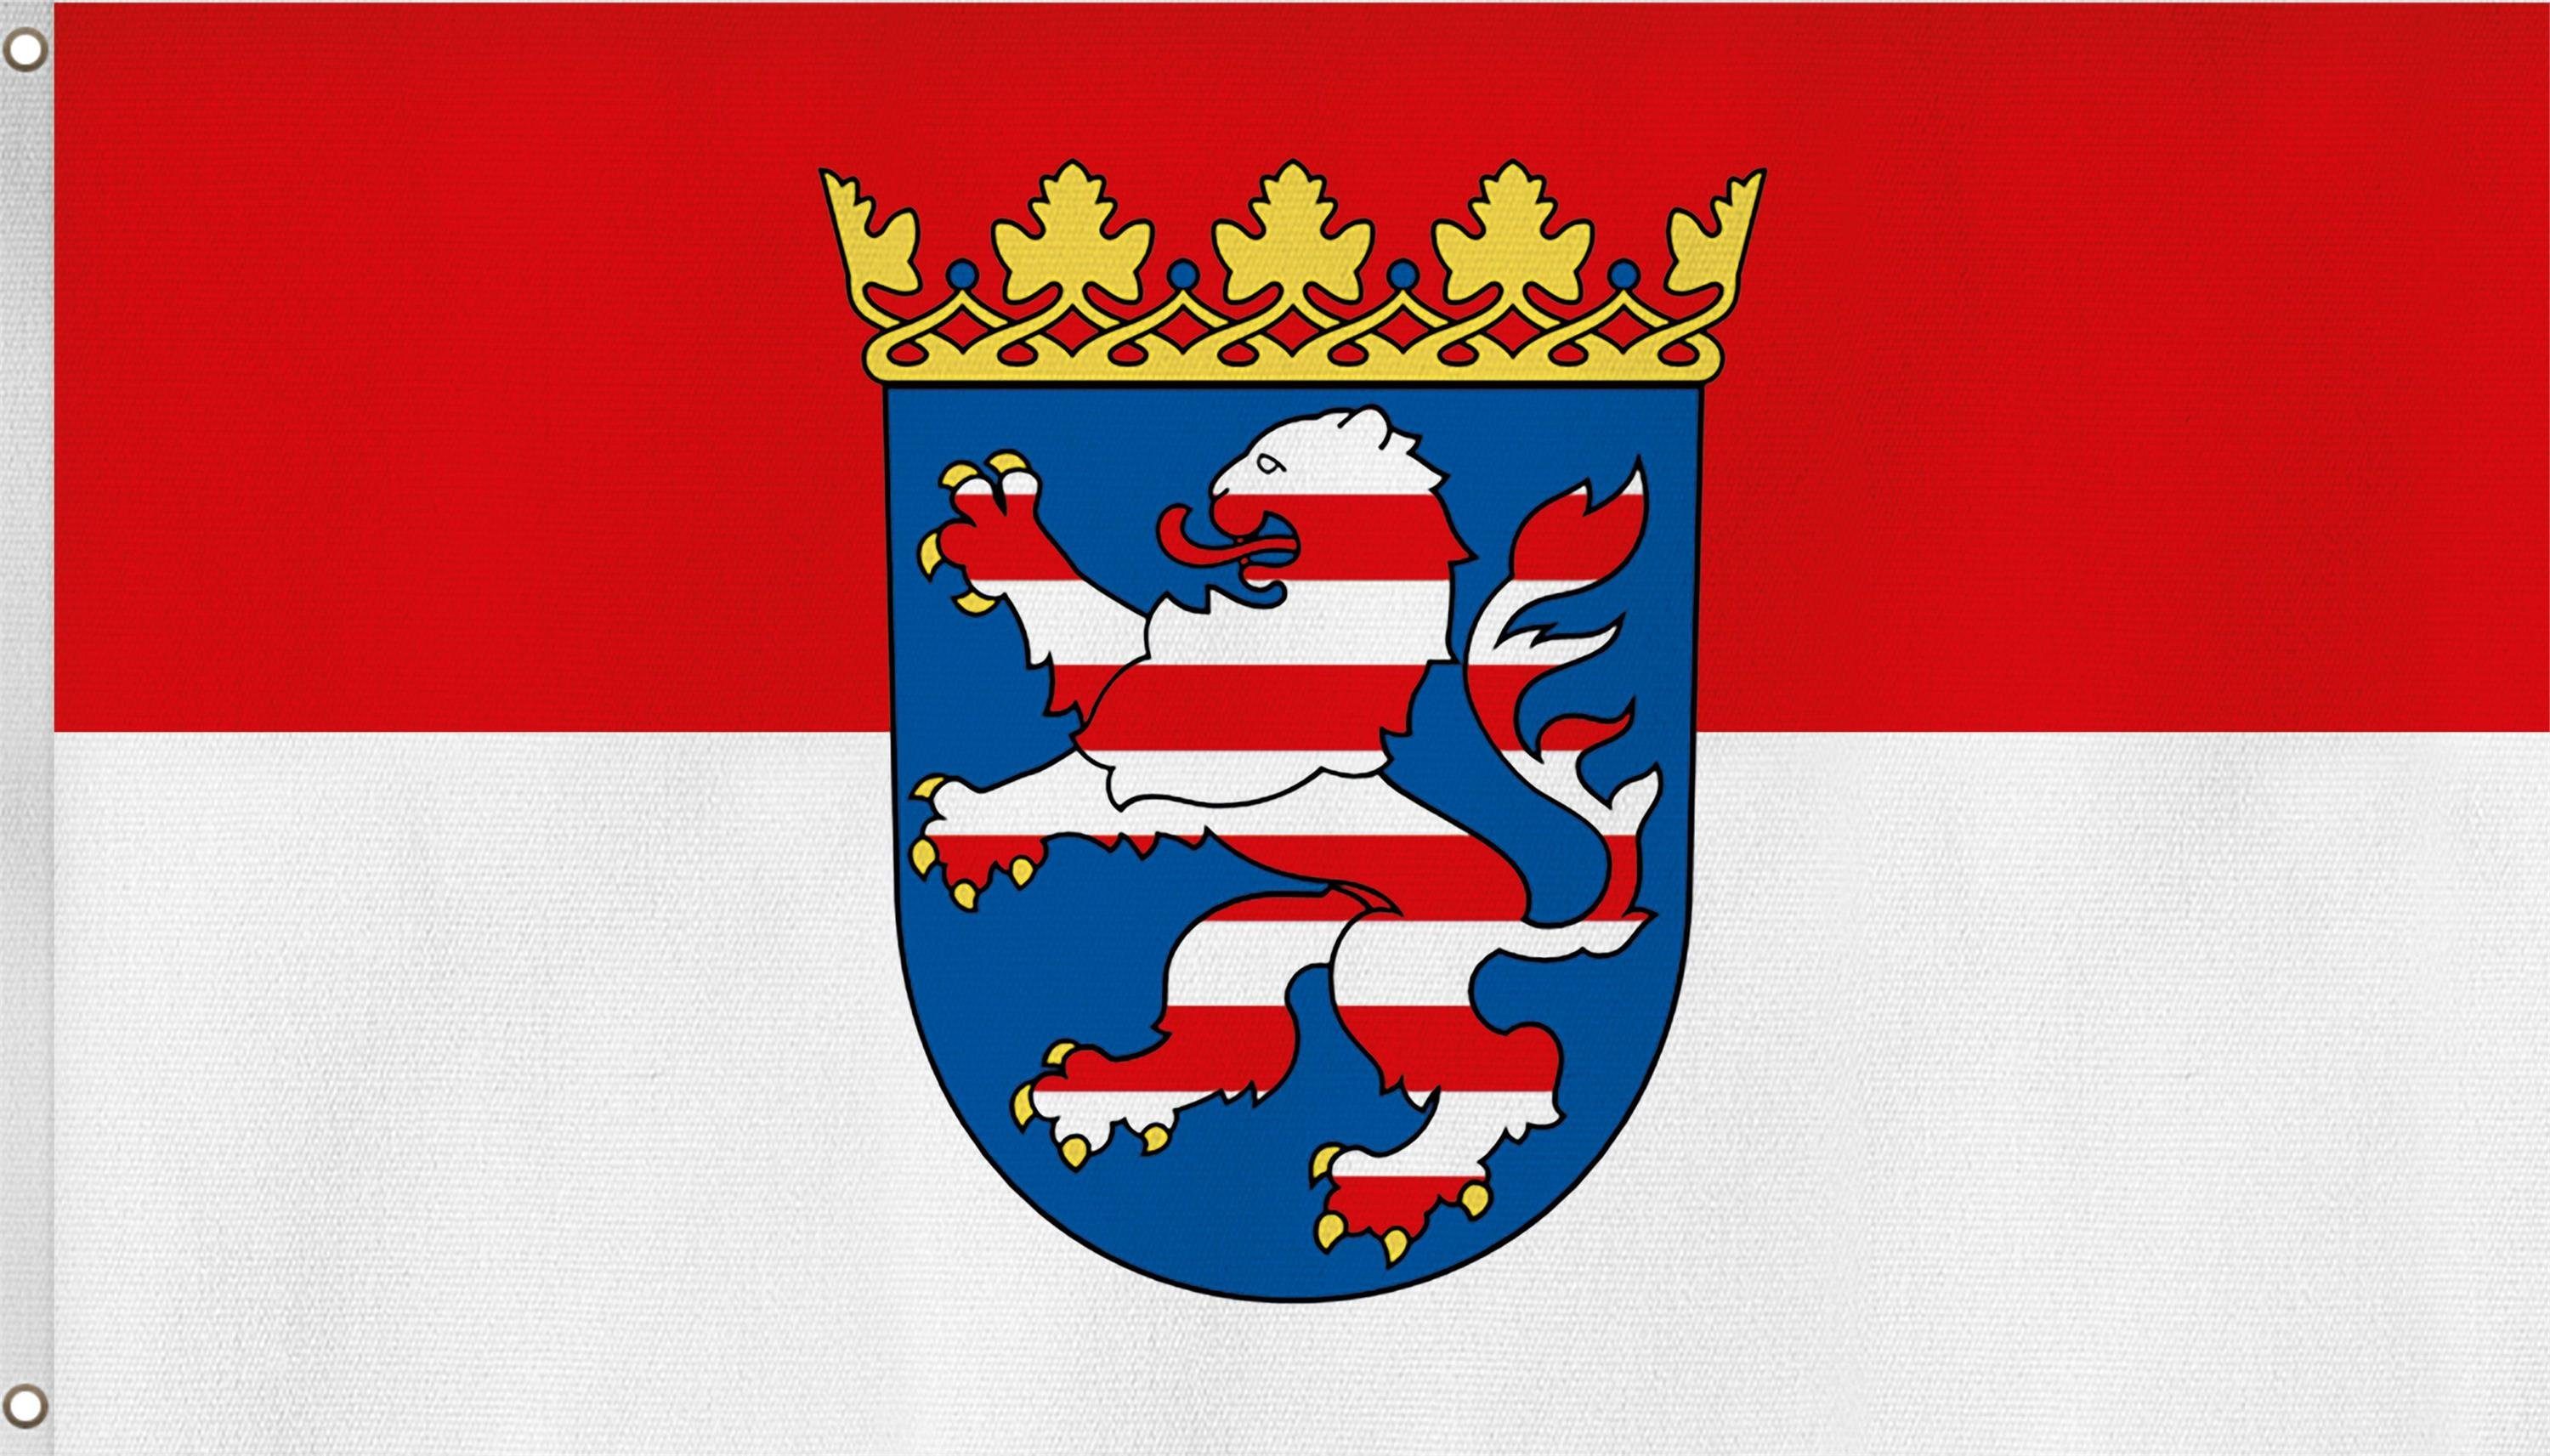 normani Flagge Fahne Bundesländerflagge 90 cm x 150 cm